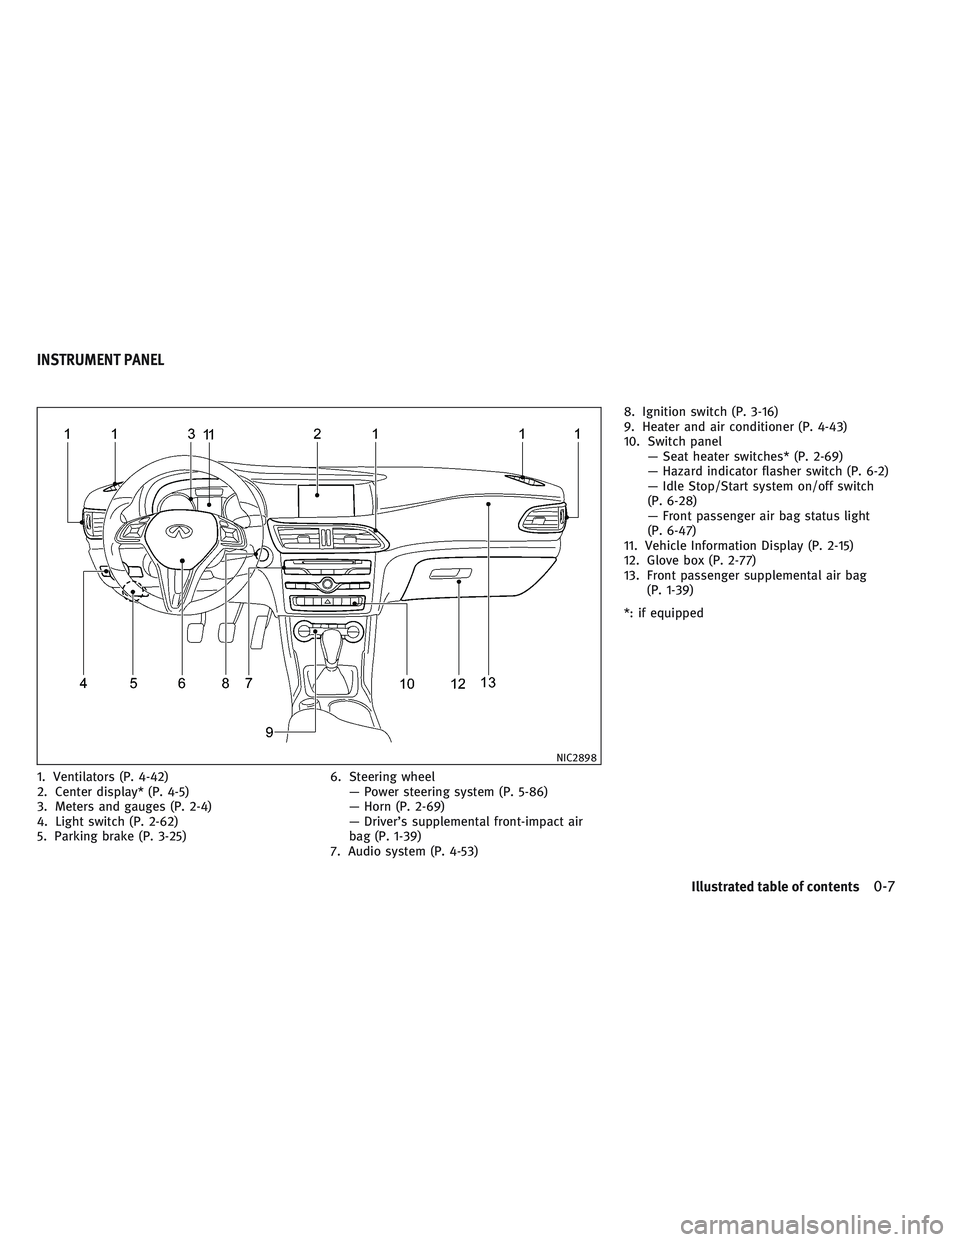 INFINITI QX30 2017  Owners Manual 1. Ventilators (P. 4-42)
2. Center display* (P. 4-5)
3. Meters and gauges (P. 2-4)
4. Light switch (P. 2-62)
5. Parking brake (P. 3-25)6. Steering wheel
— Power steering system (P. 5-86)
— Horn (P